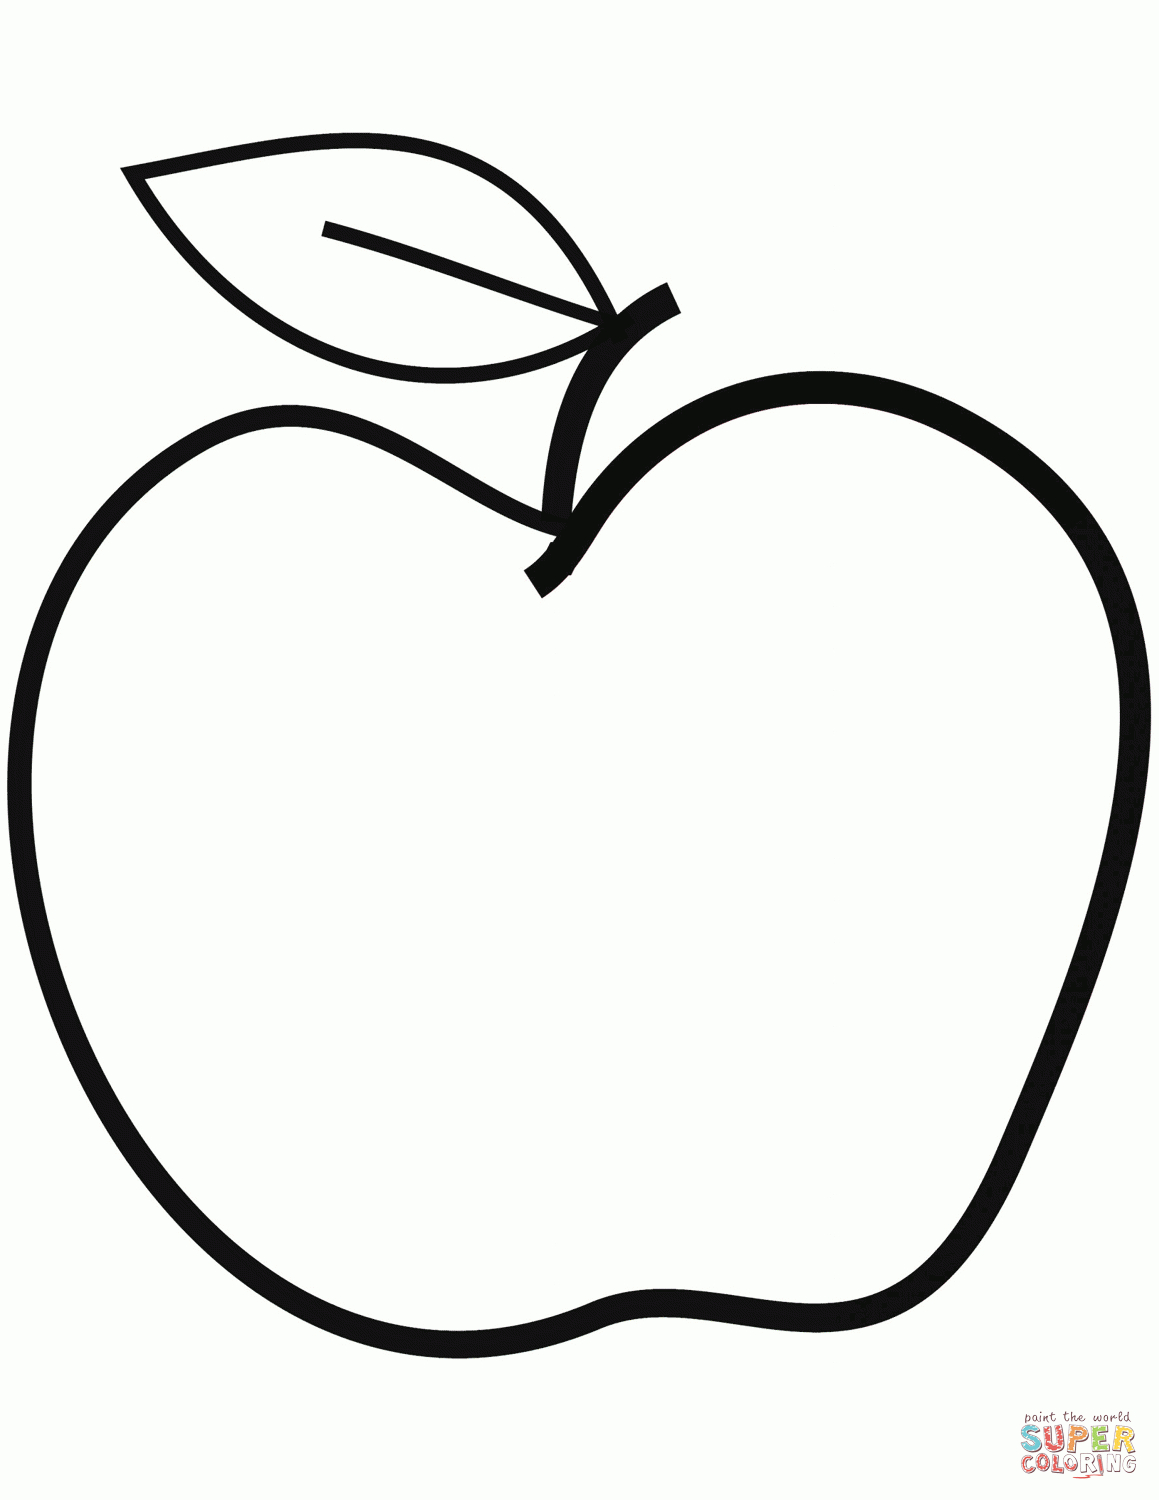 Ausmalbild: Apfel 20 | Ausmalbilder Kostenlos Zum Ausdrucken mit Ausmalbild Kleeblatt